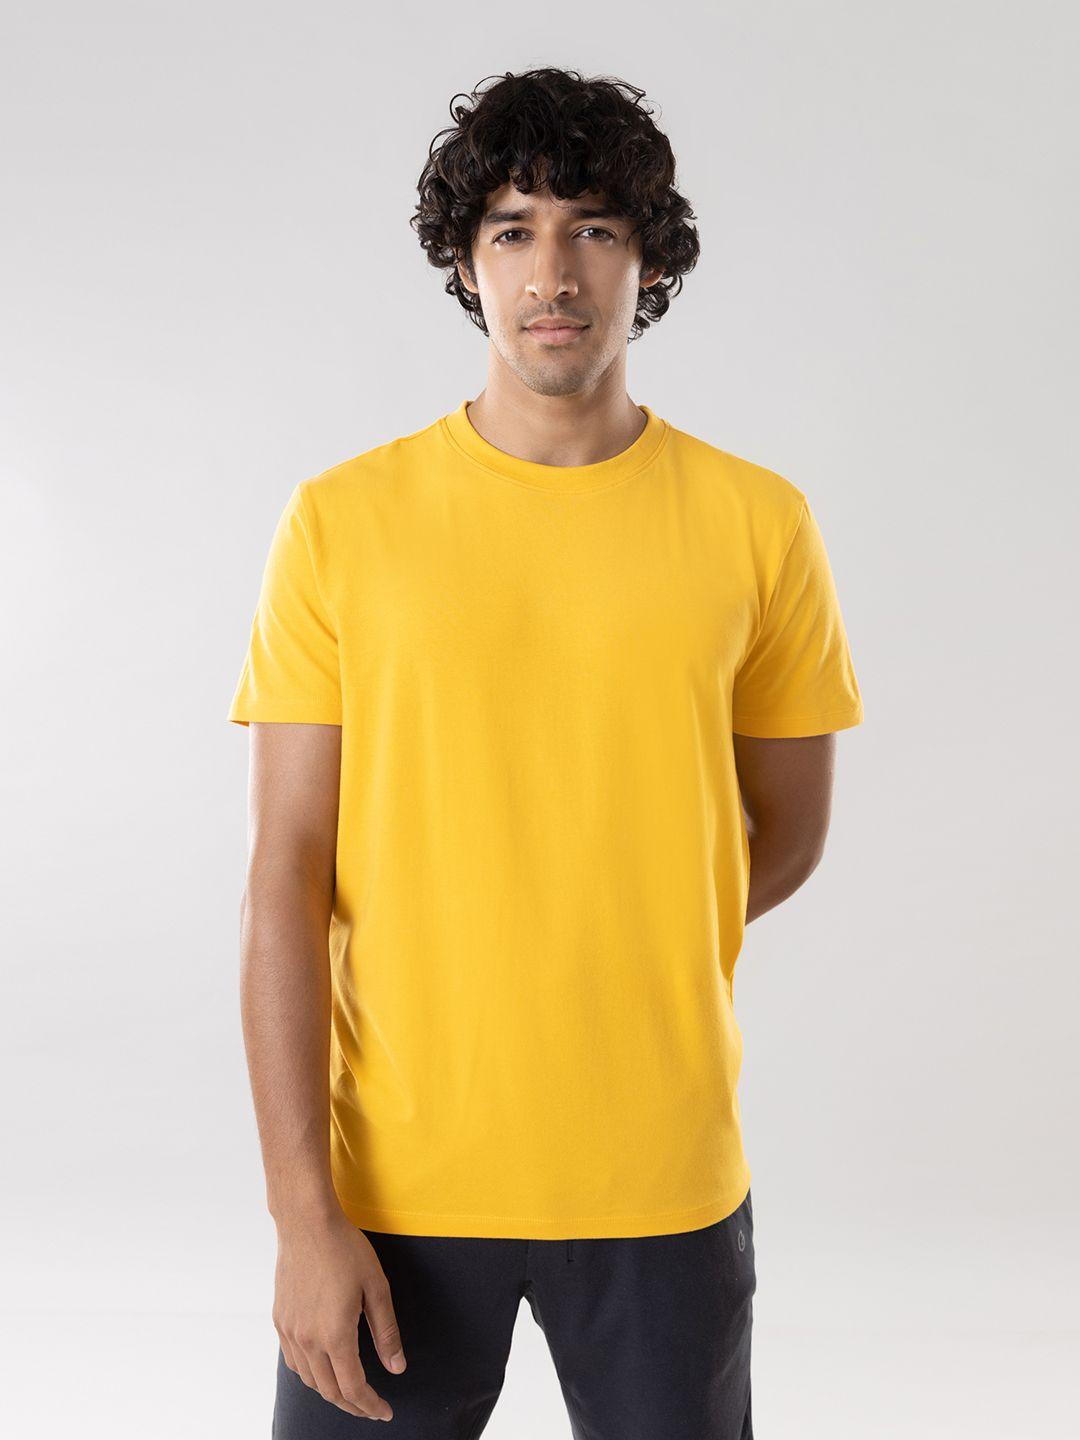 gloot-men-yellow-stretch-cotton-anti-odor-&-anti-stain-round-neck-t-shirt